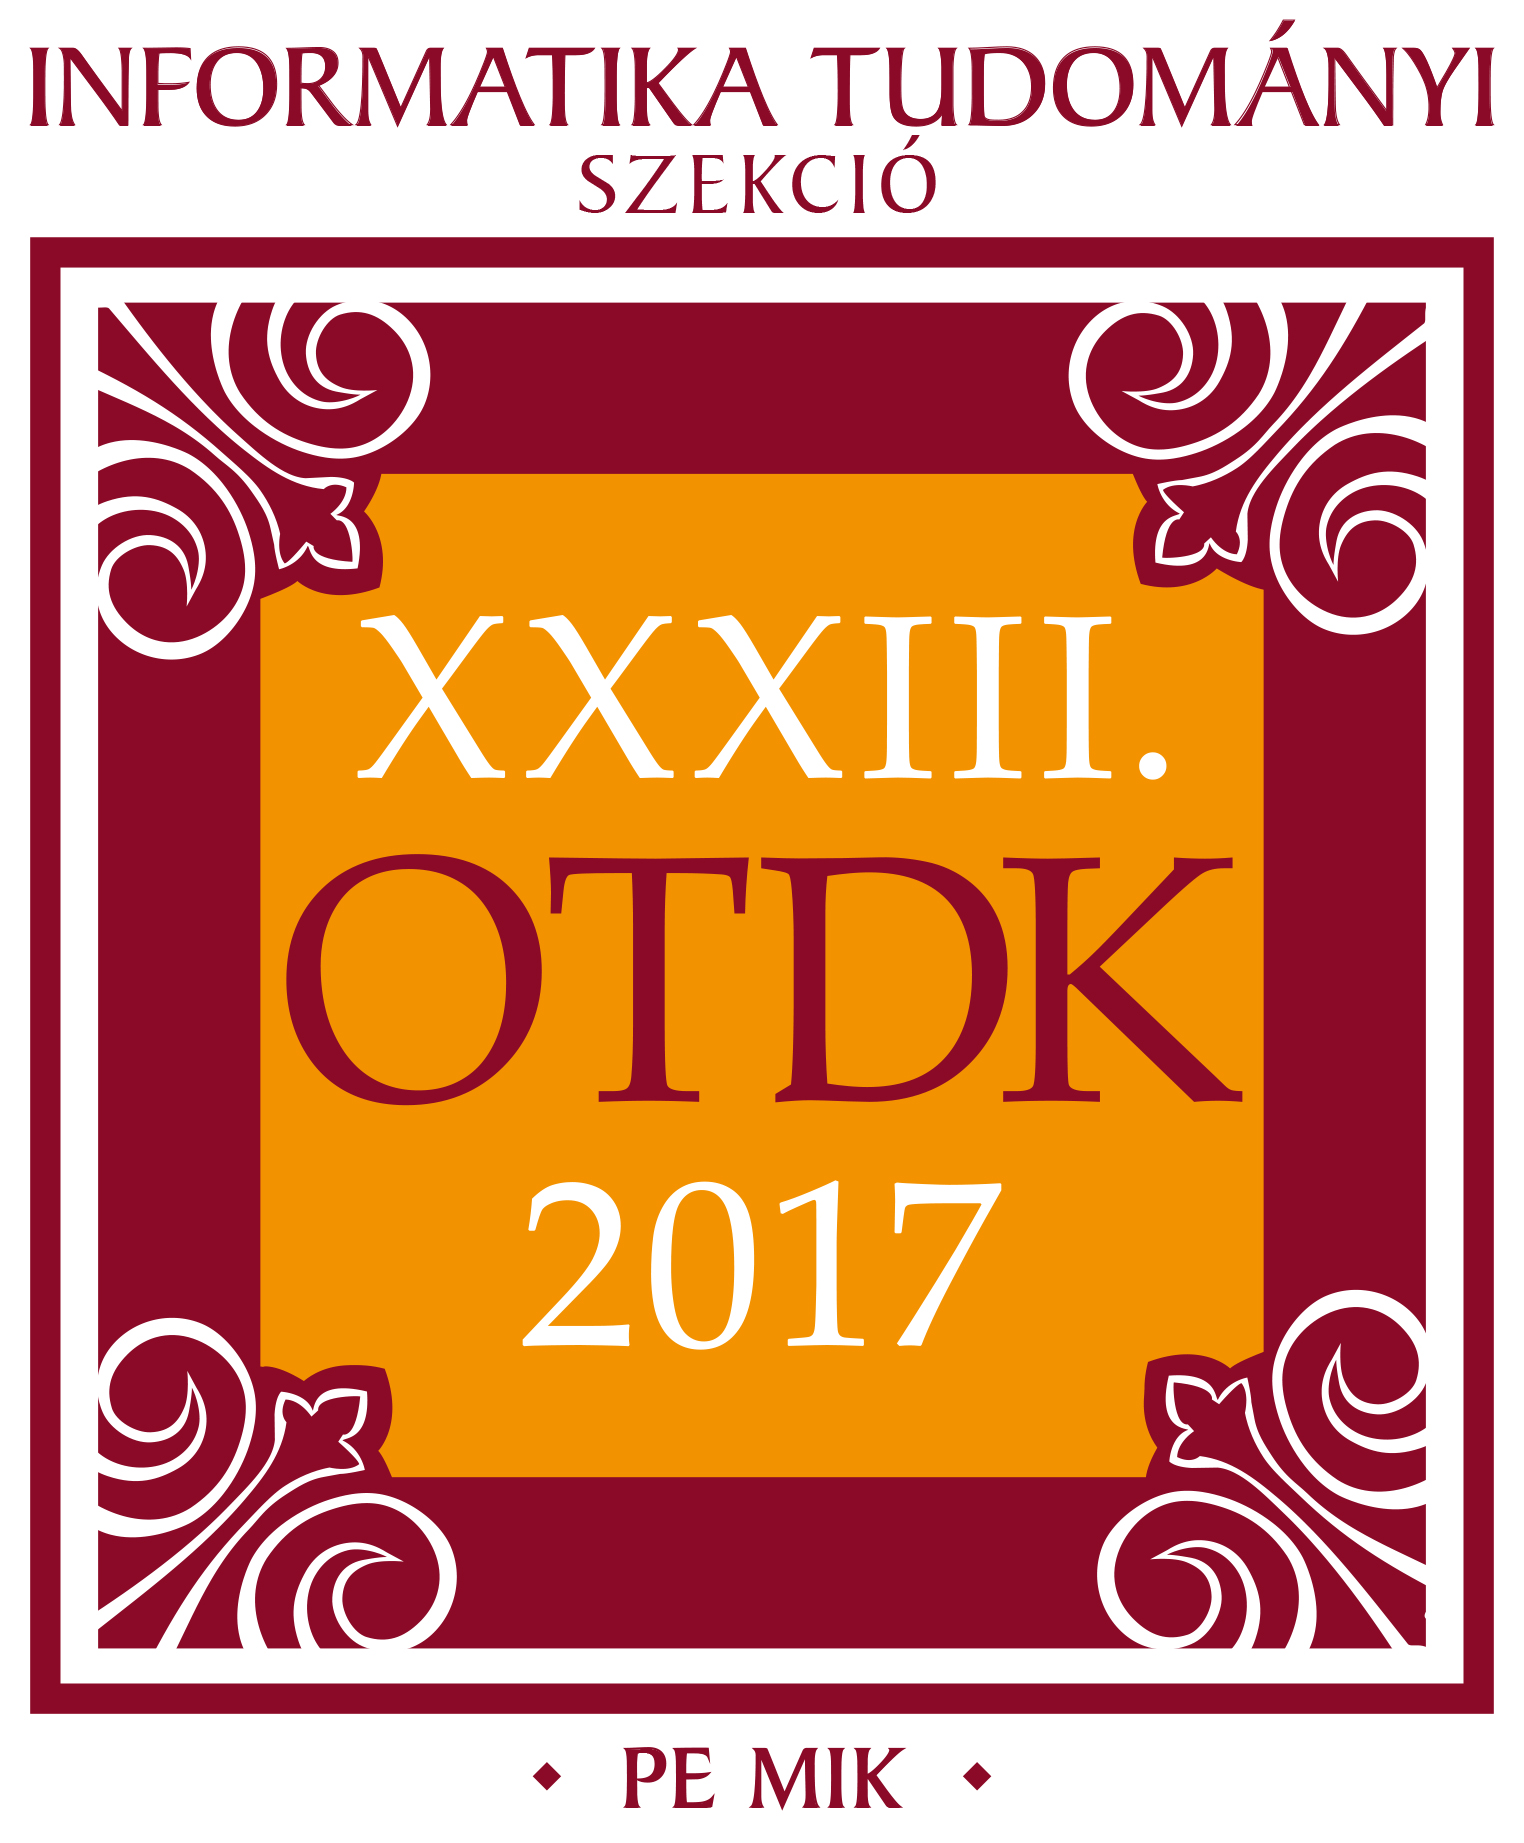 OTDK 33 Info Logo RGB